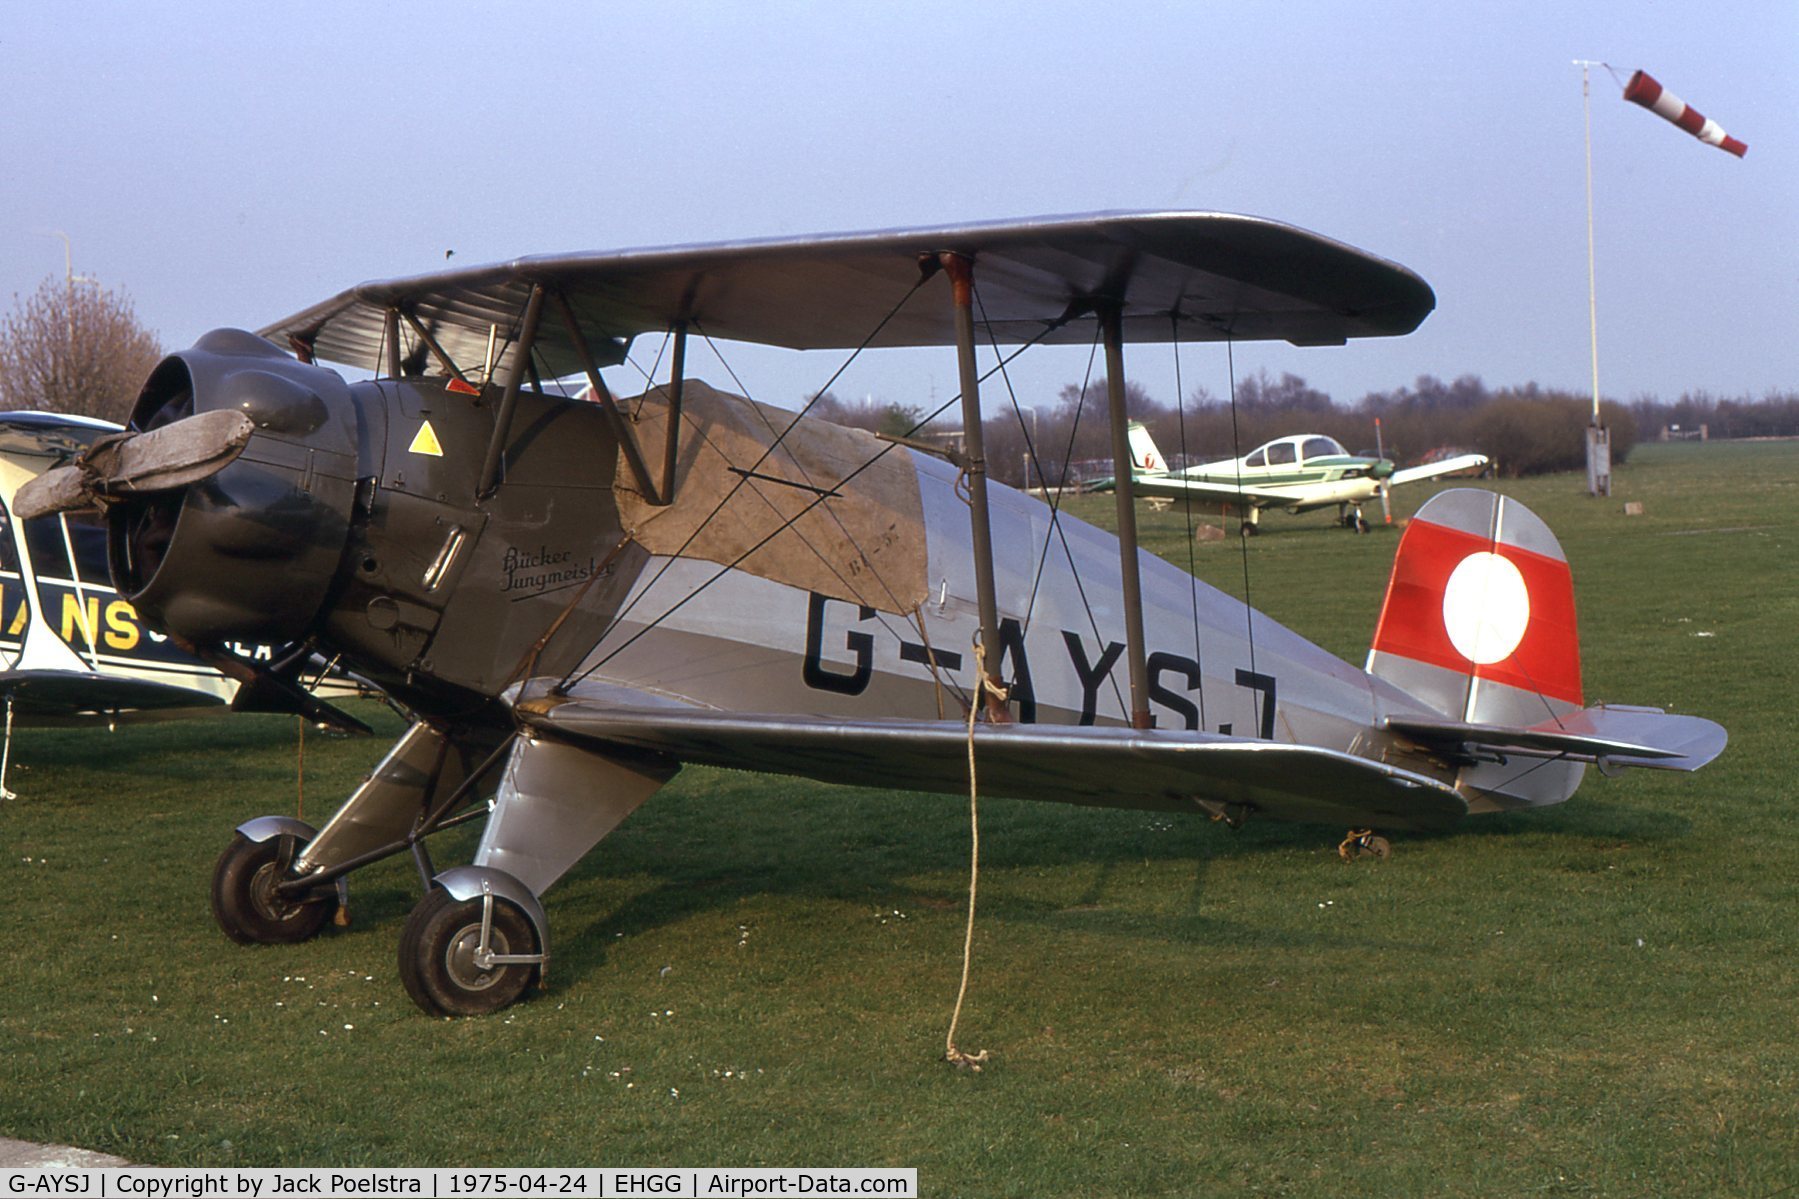 G-AYSJ, 1938 Bucker Bu-133C Jungmeister C/N 38, Bu-133 at Groningen airport